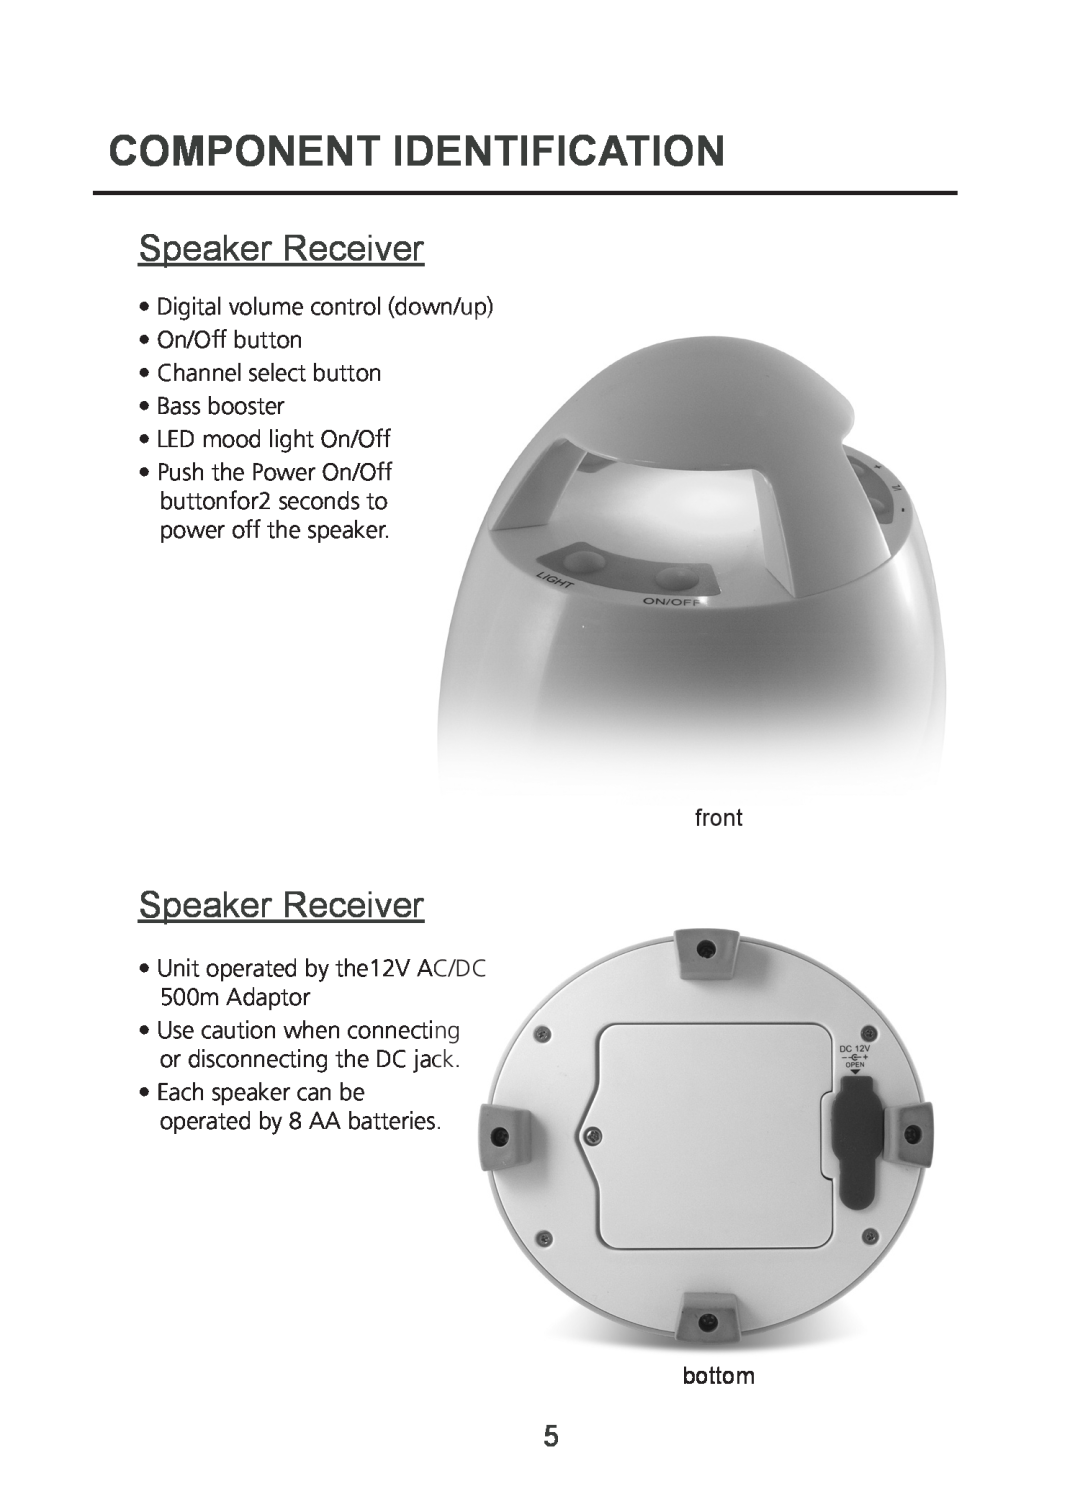 Grace WPBULLET Speaker Receiver, Component Identification, Digital volume control down/up On/Off button, front, bottom 